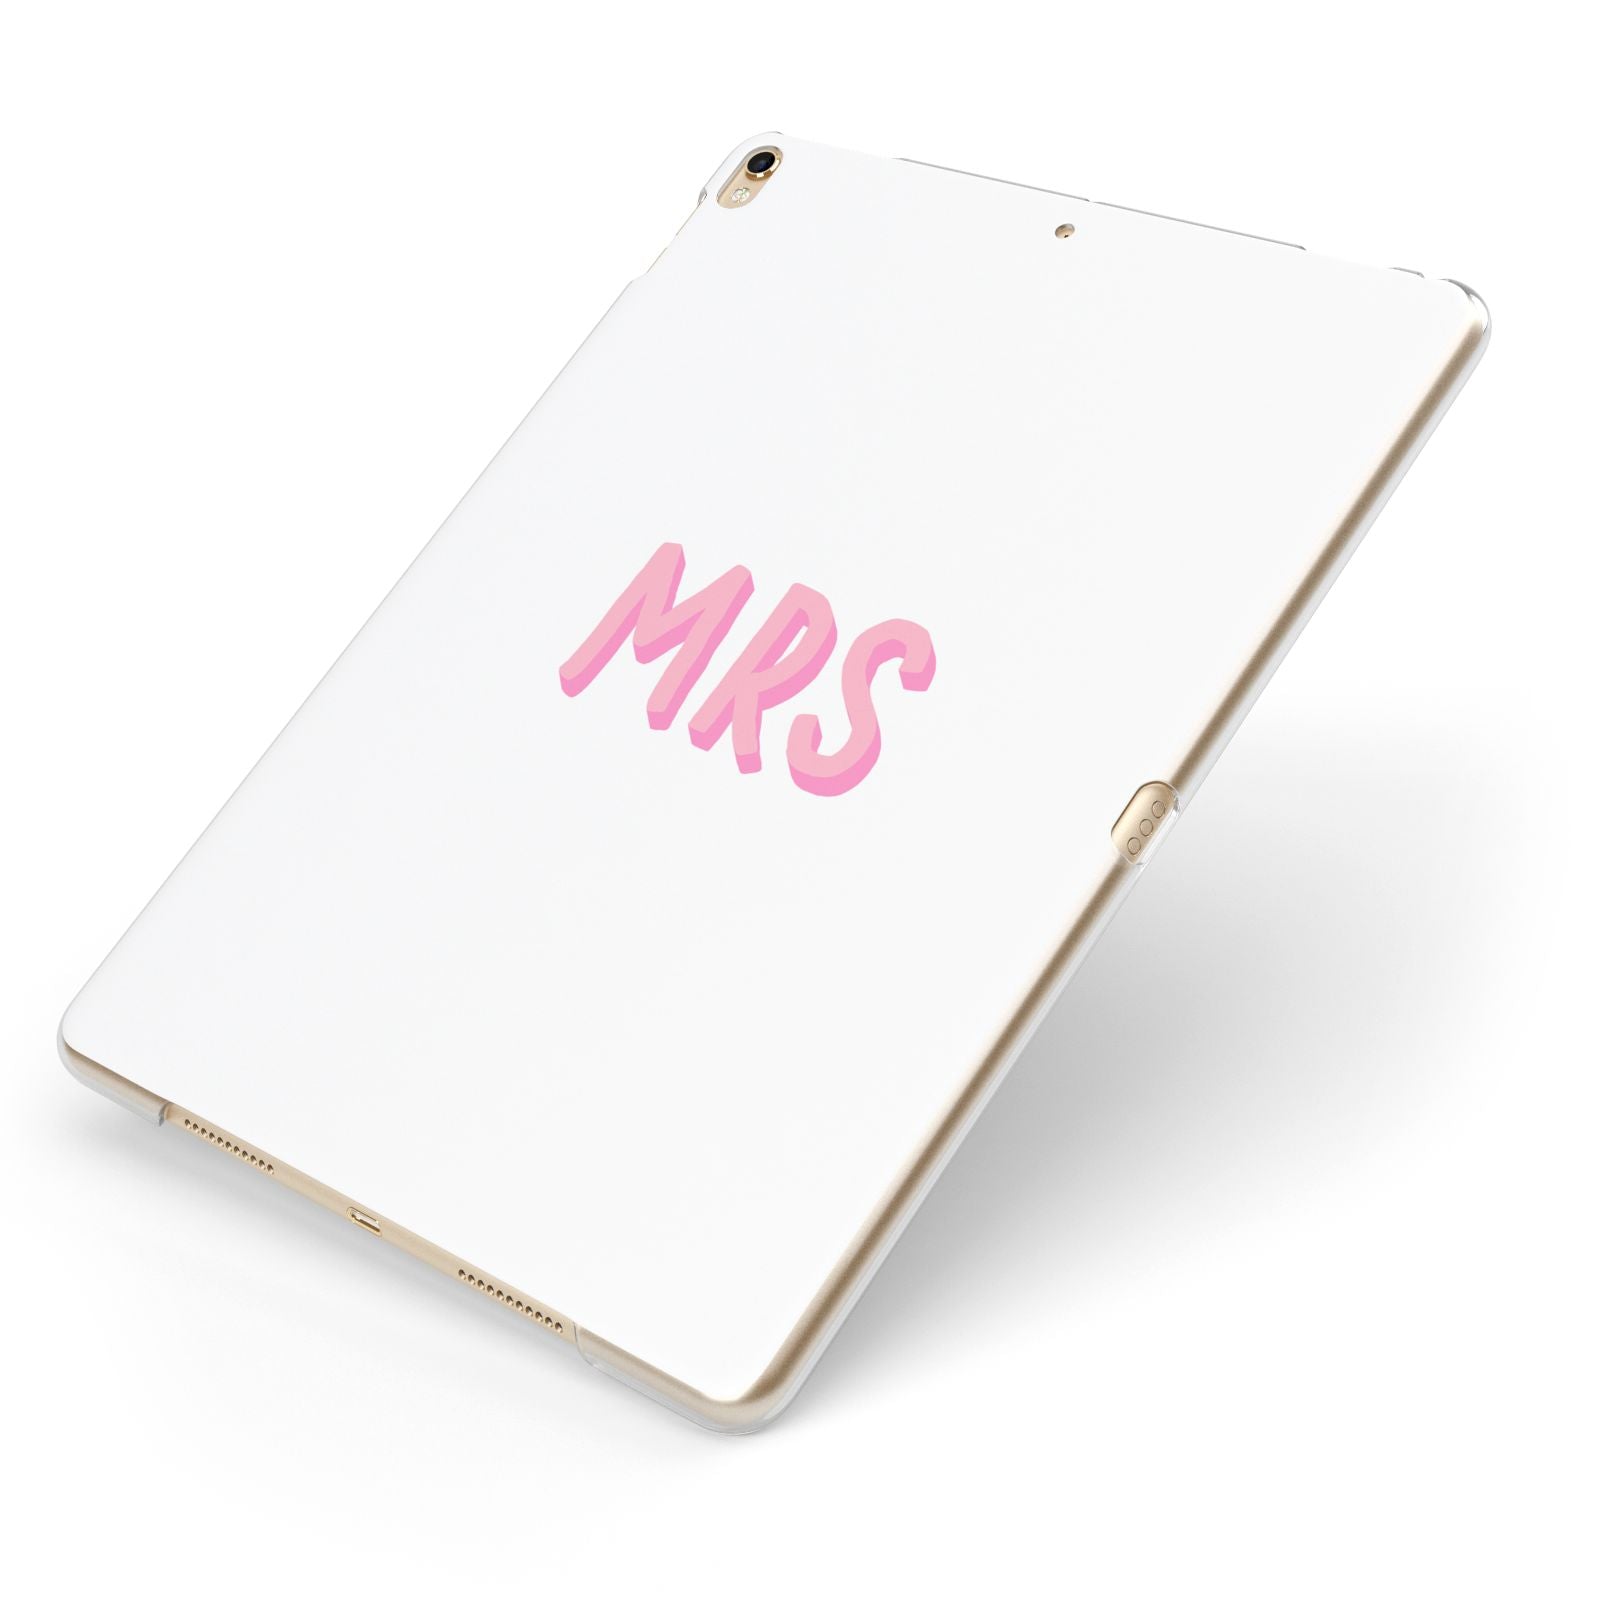 Mrs Apple iPad Case on Gold iPad Side View